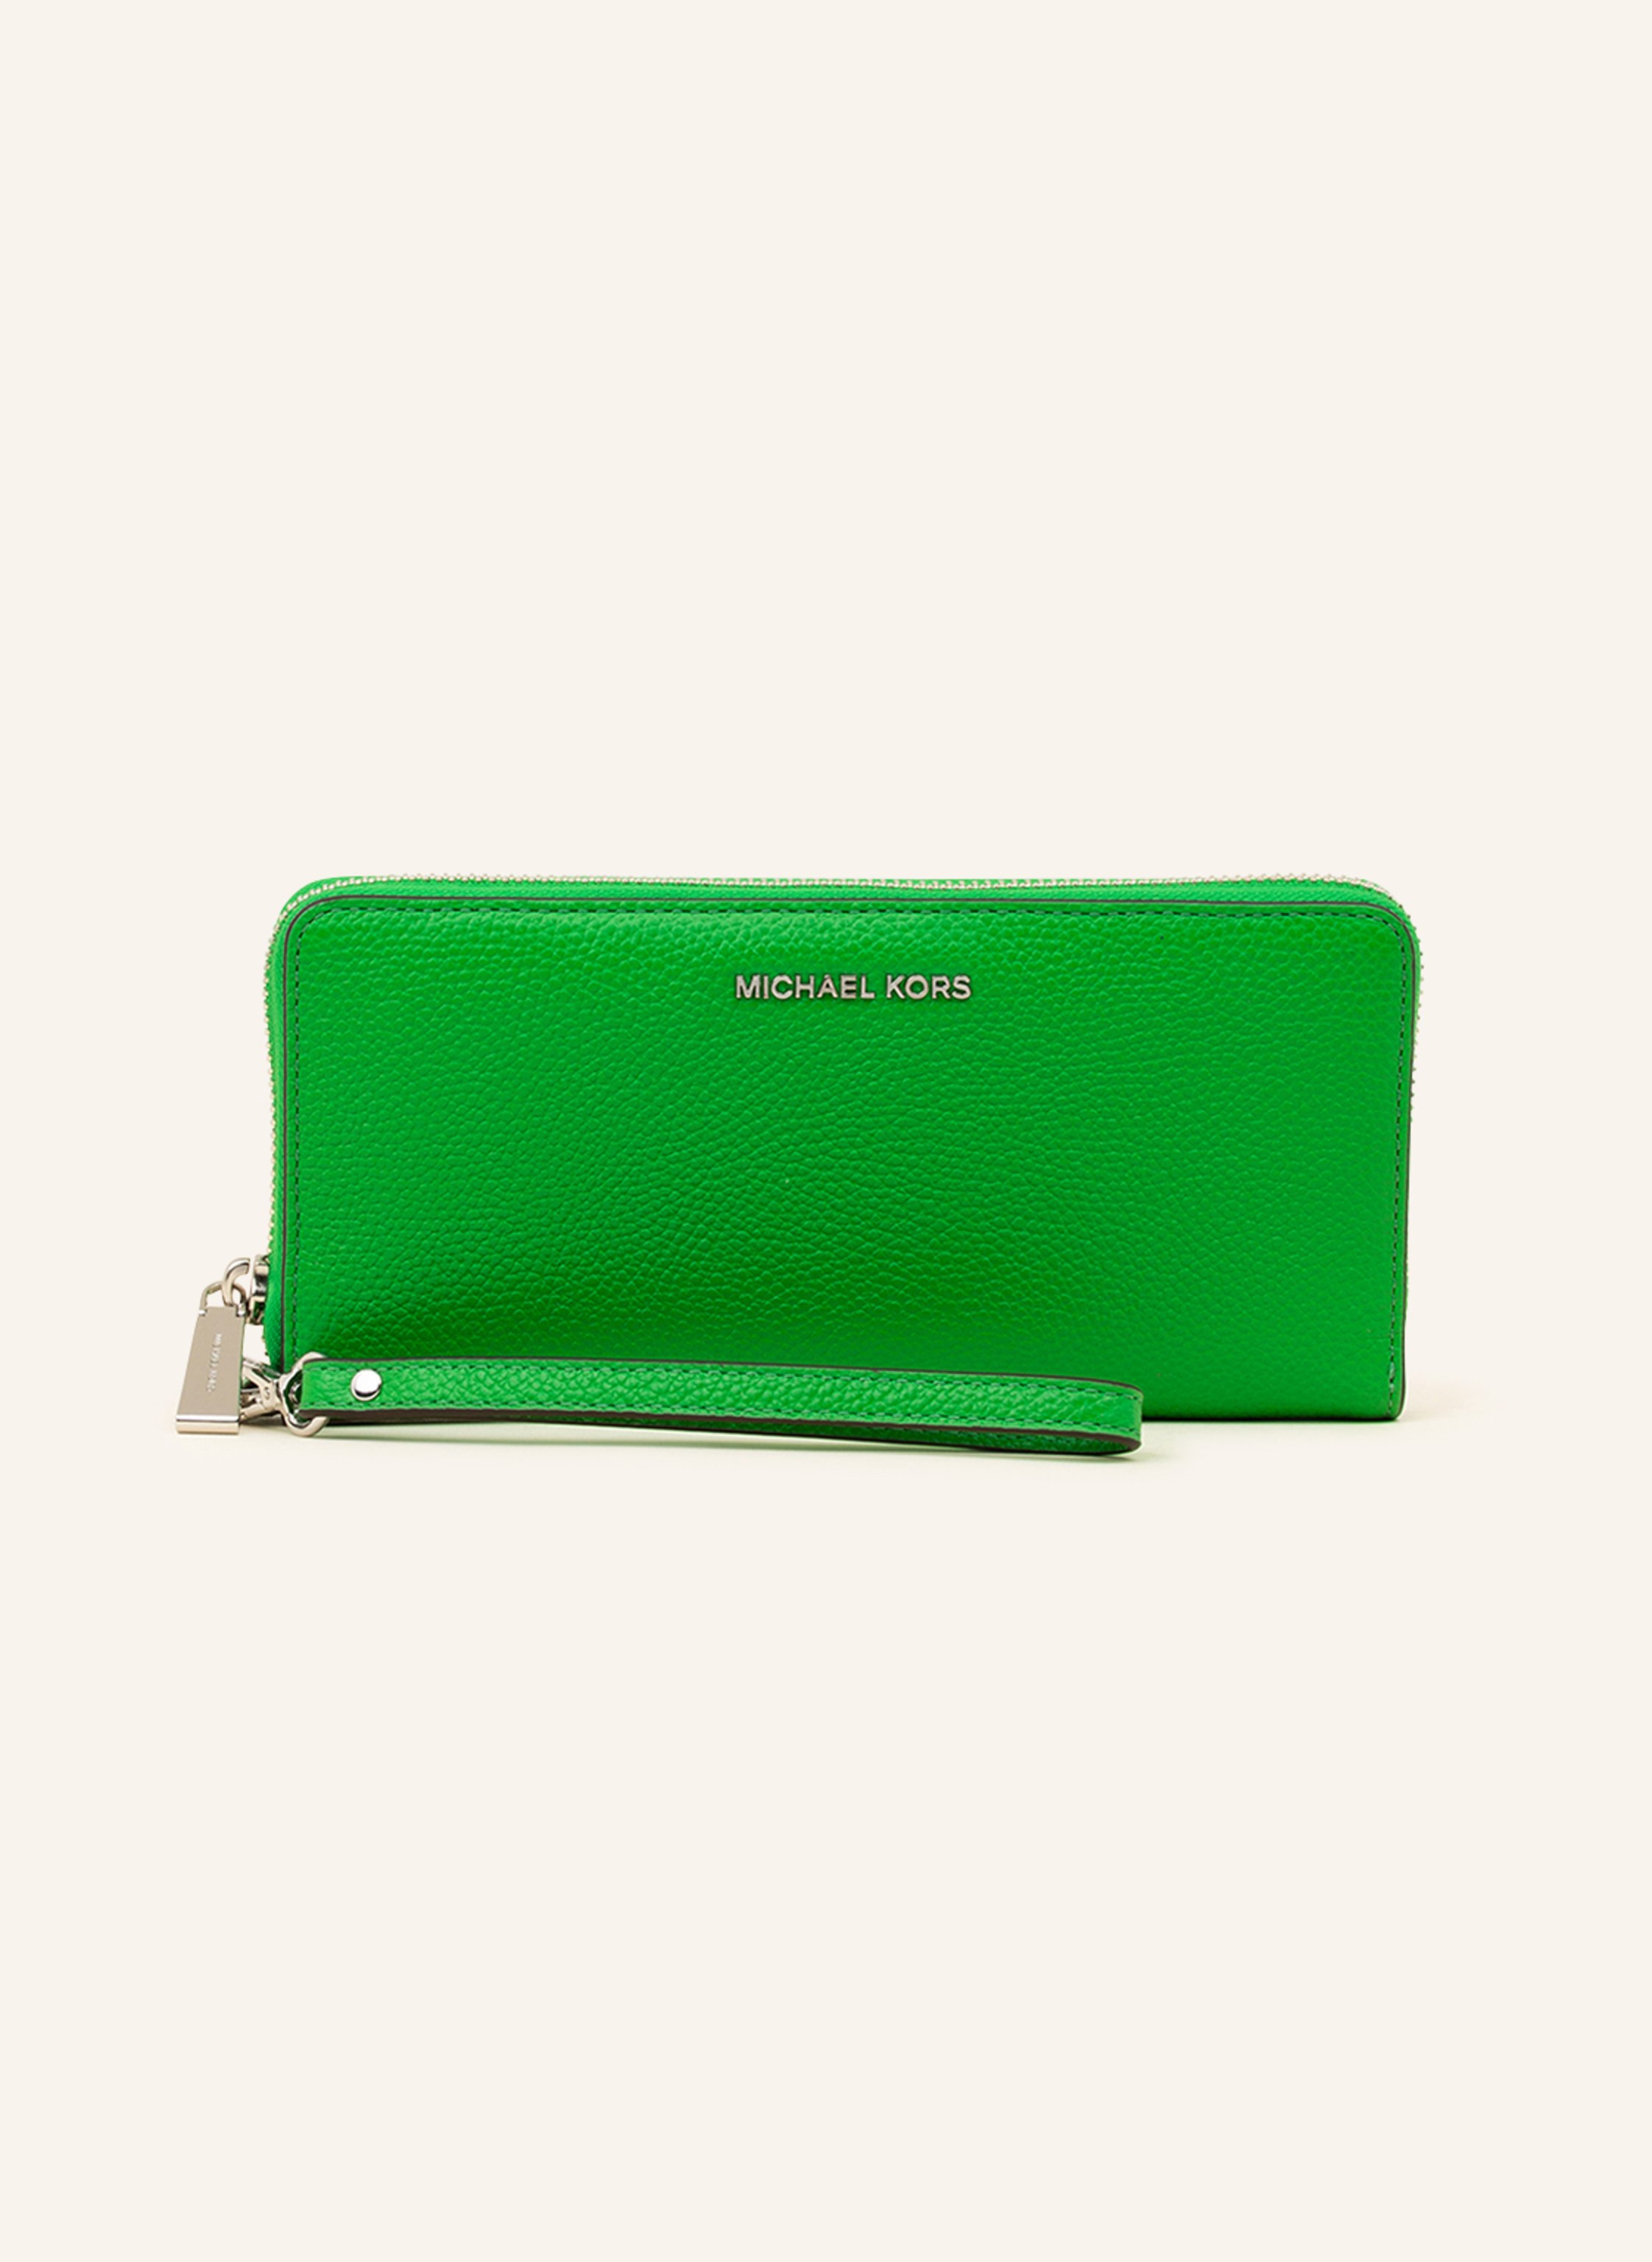 MICHAEL KORS Wallet JET SET in green | Breuninger